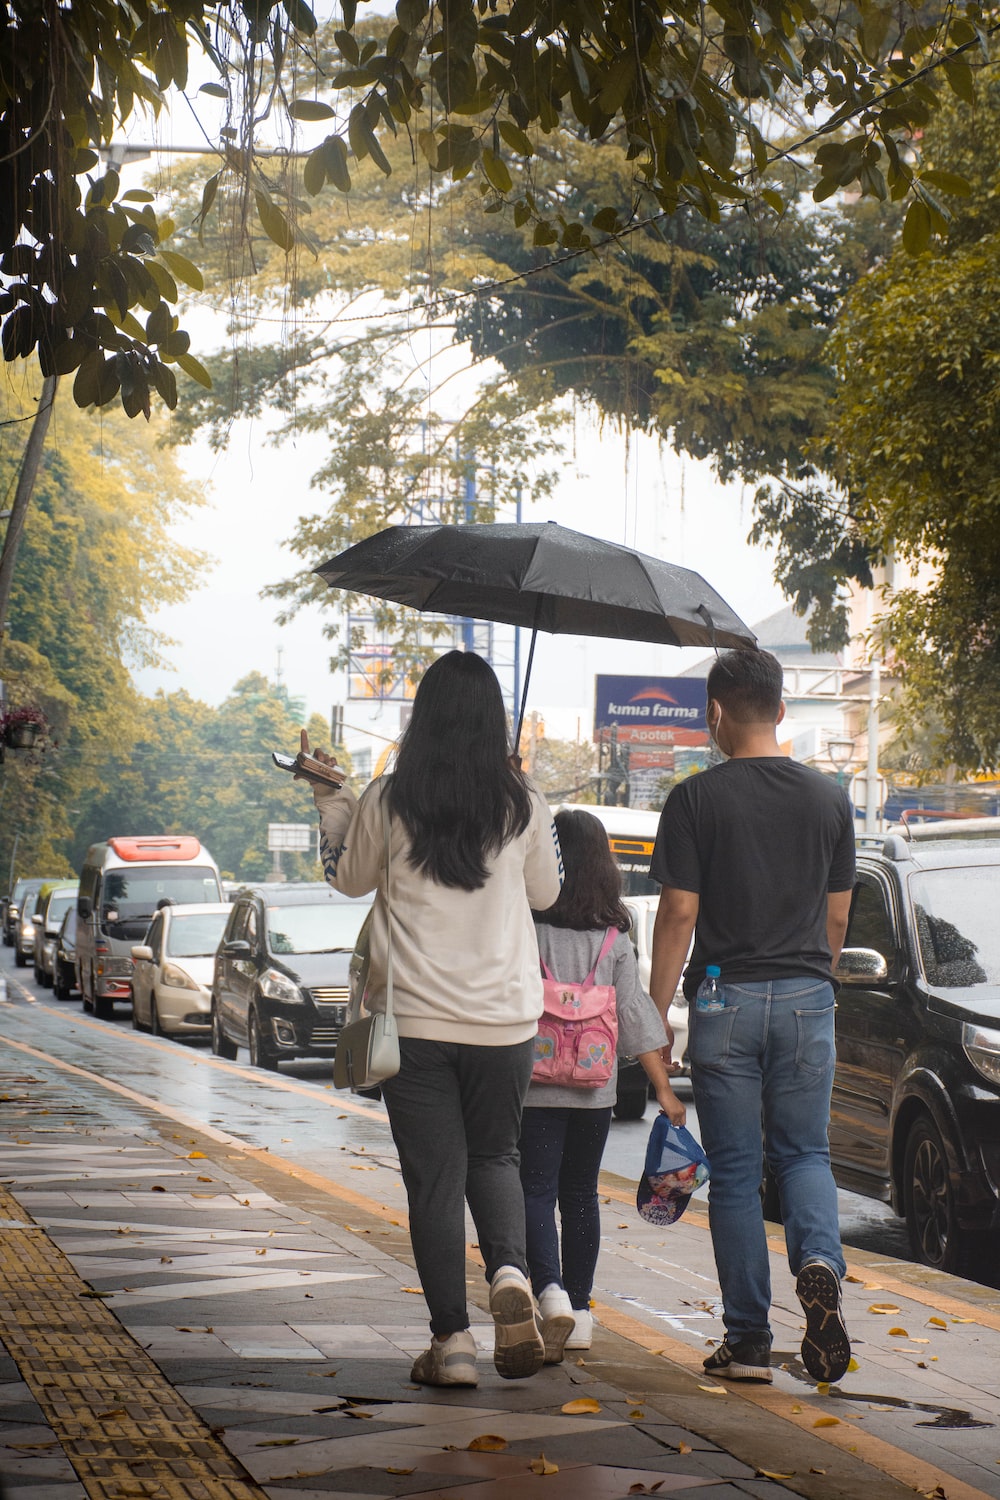 a group of people walk down a sidewalk under an umbrella